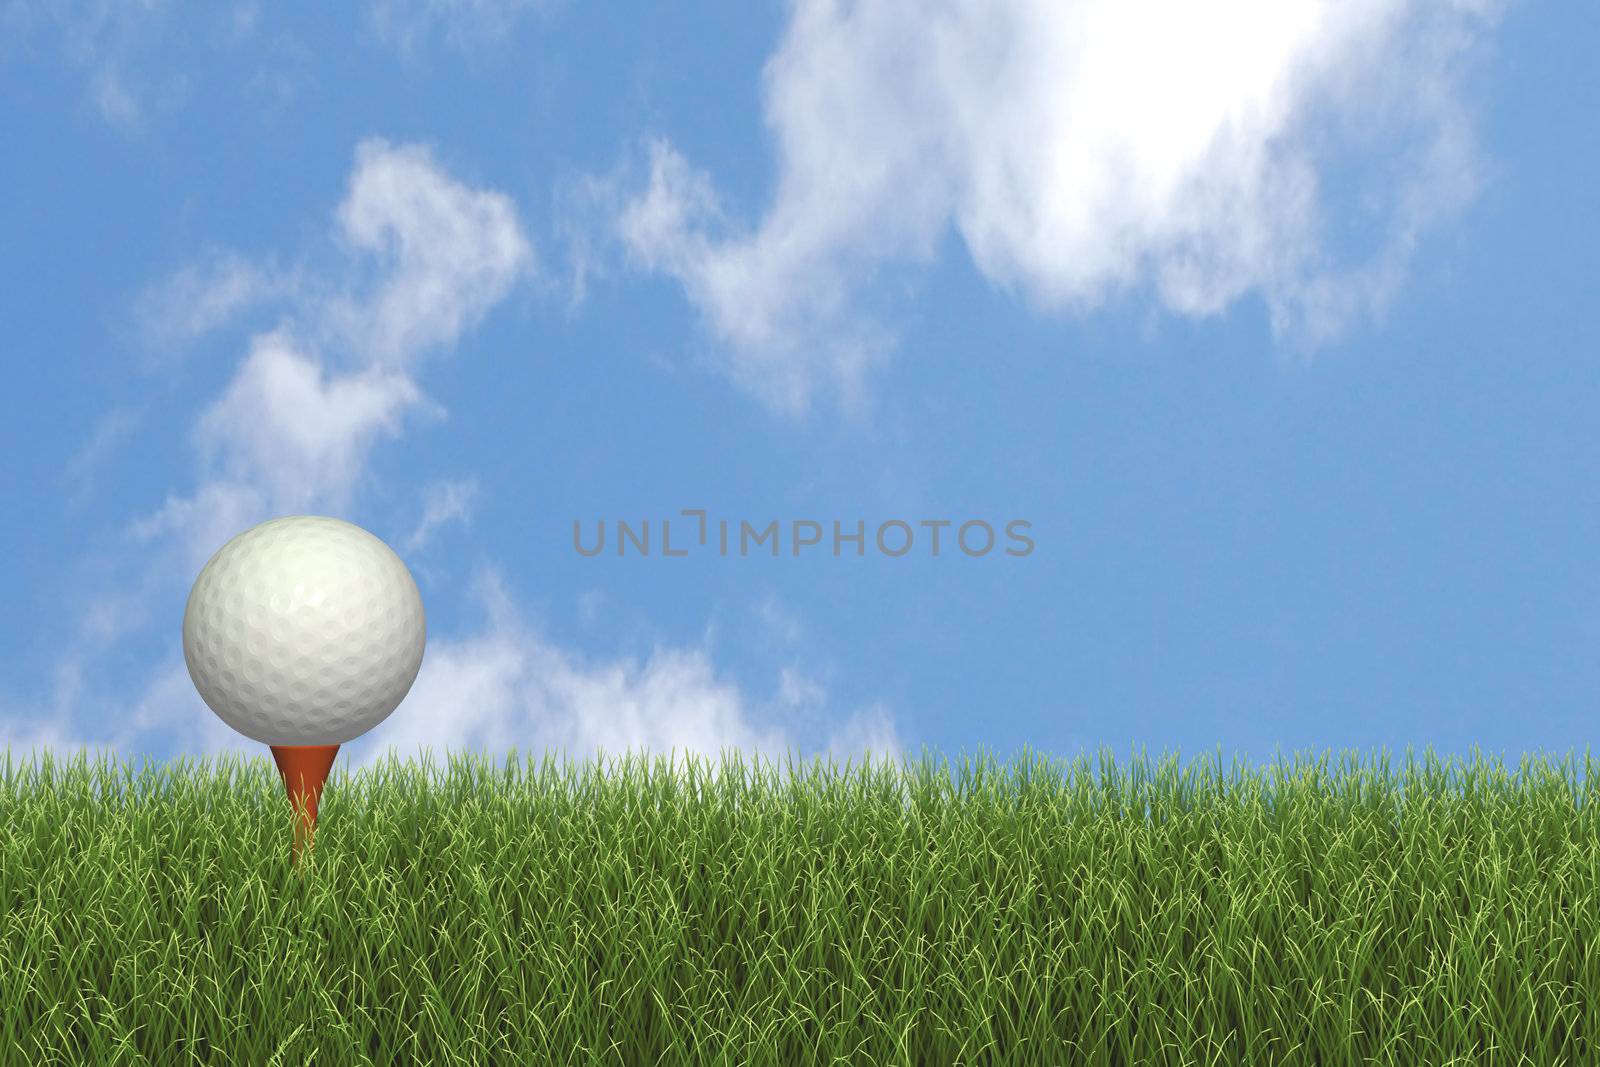 Image of a golf ball on a tee against a blue sky.